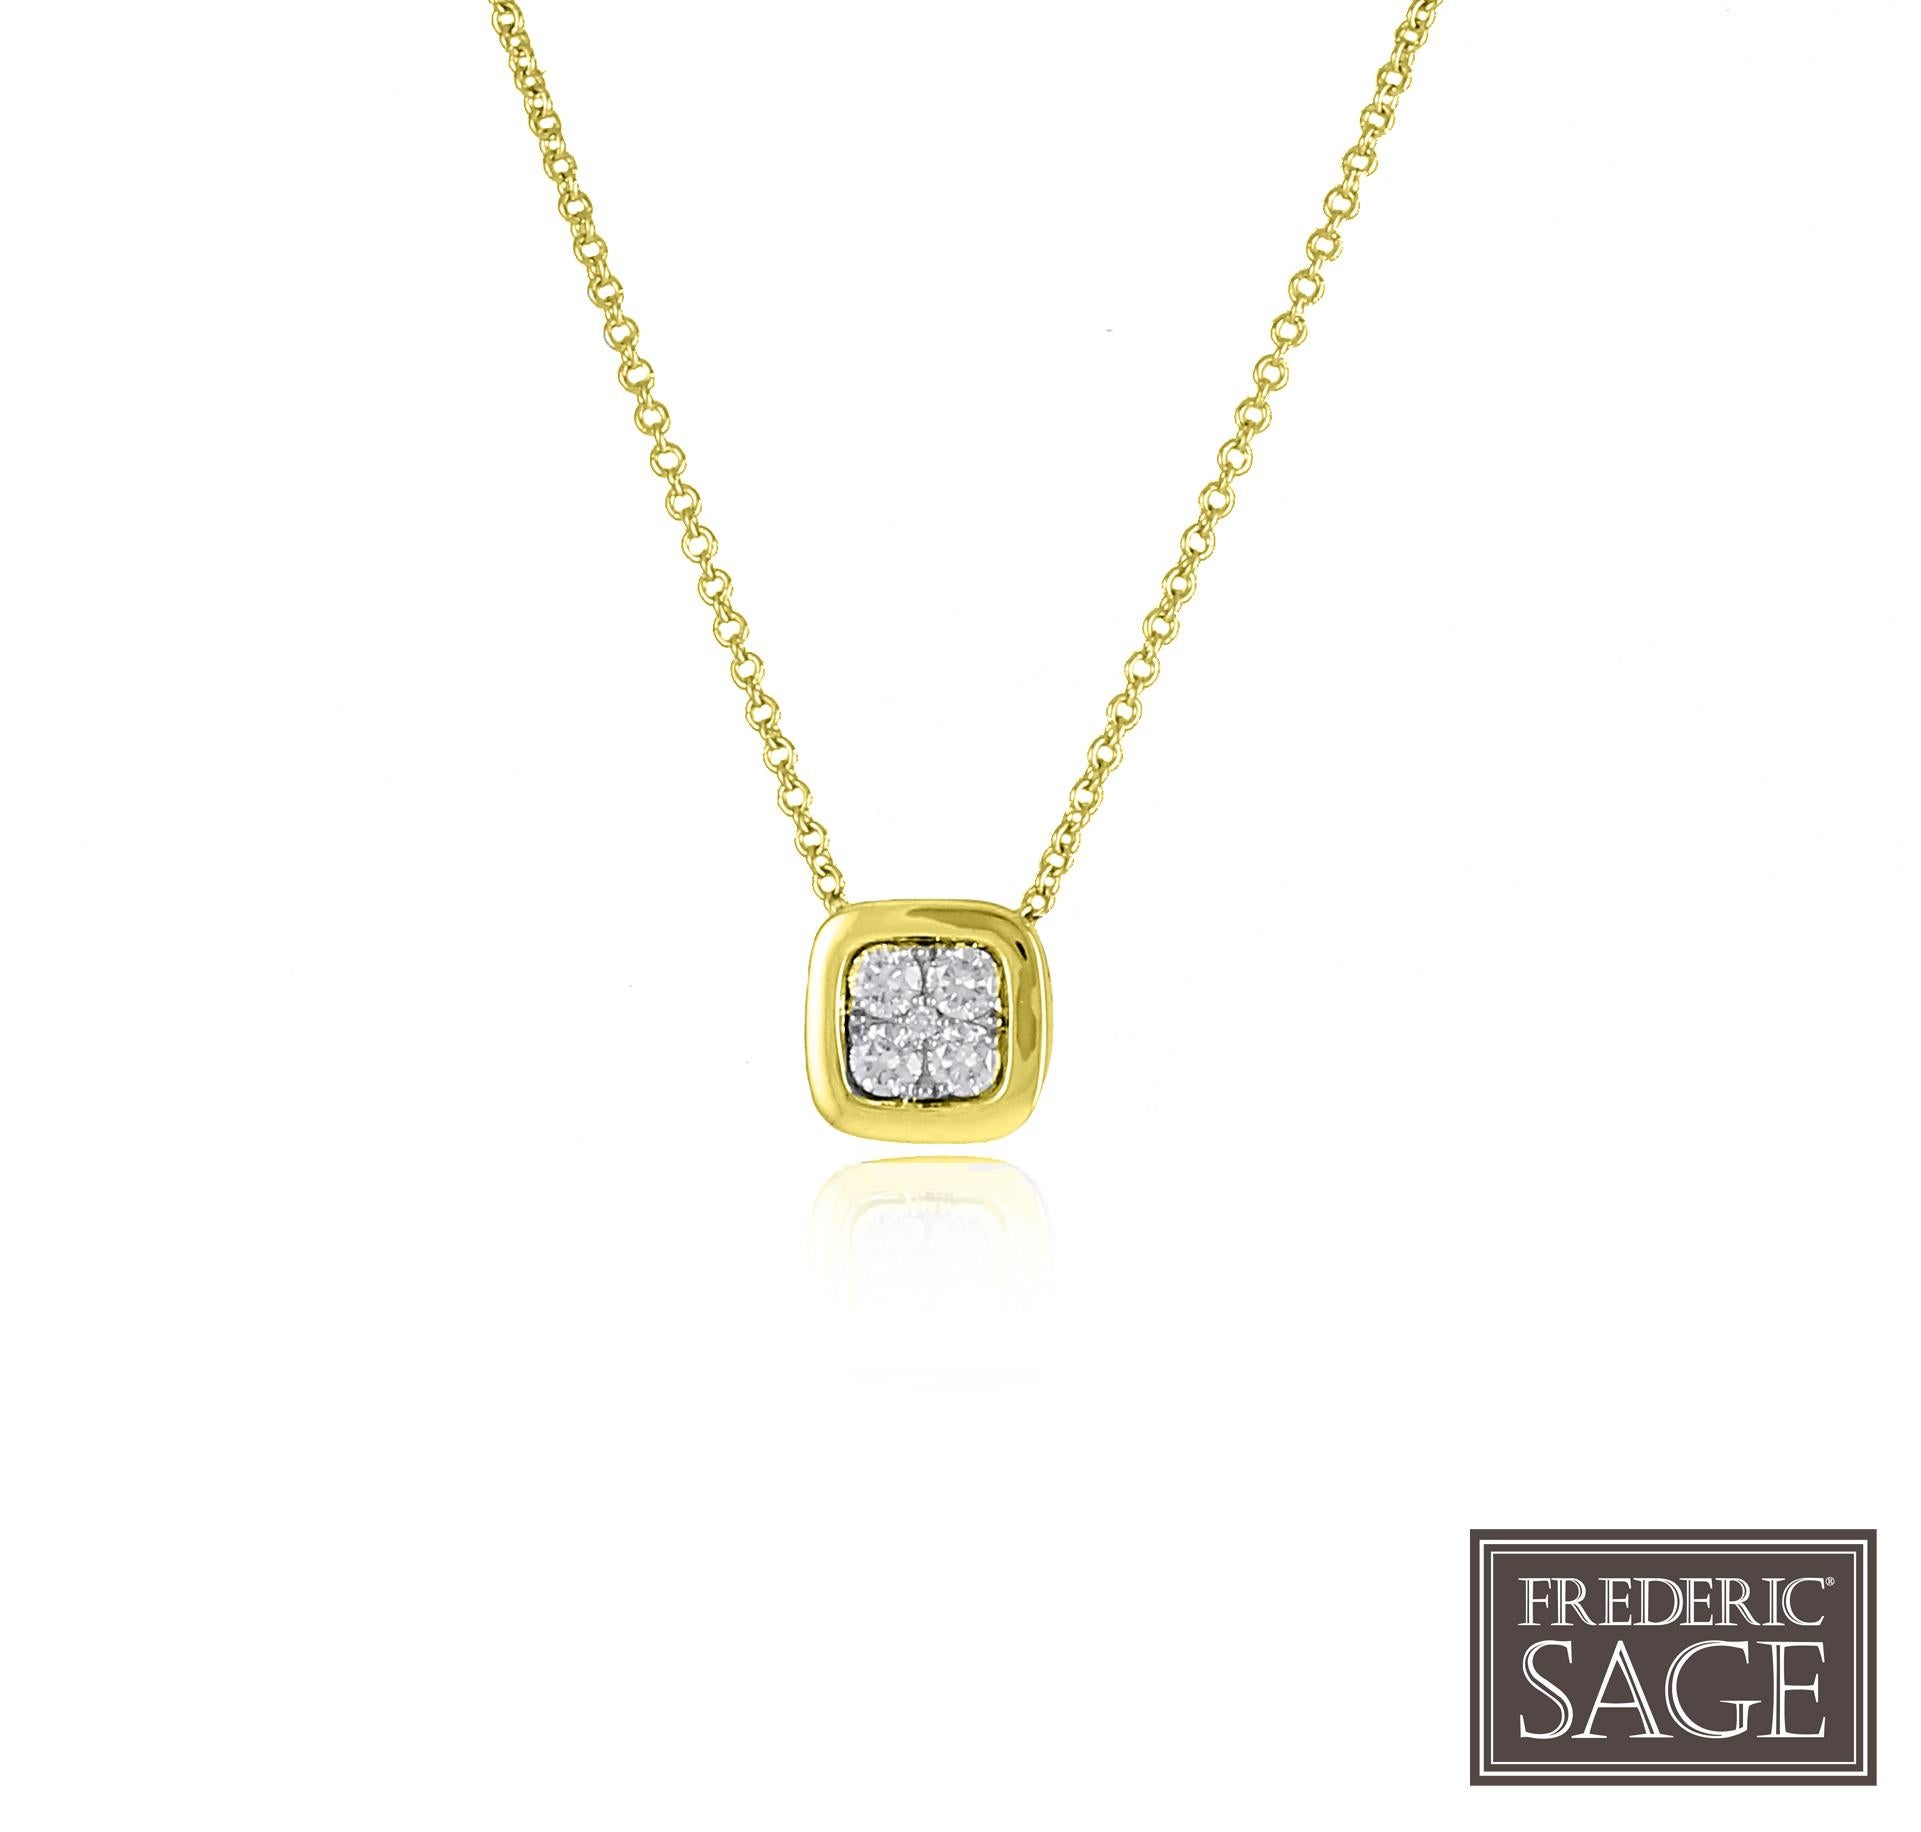 Contemporary Frederic Sage 0.19 Carat Diamond 7mm Pendant Necklace For Sale